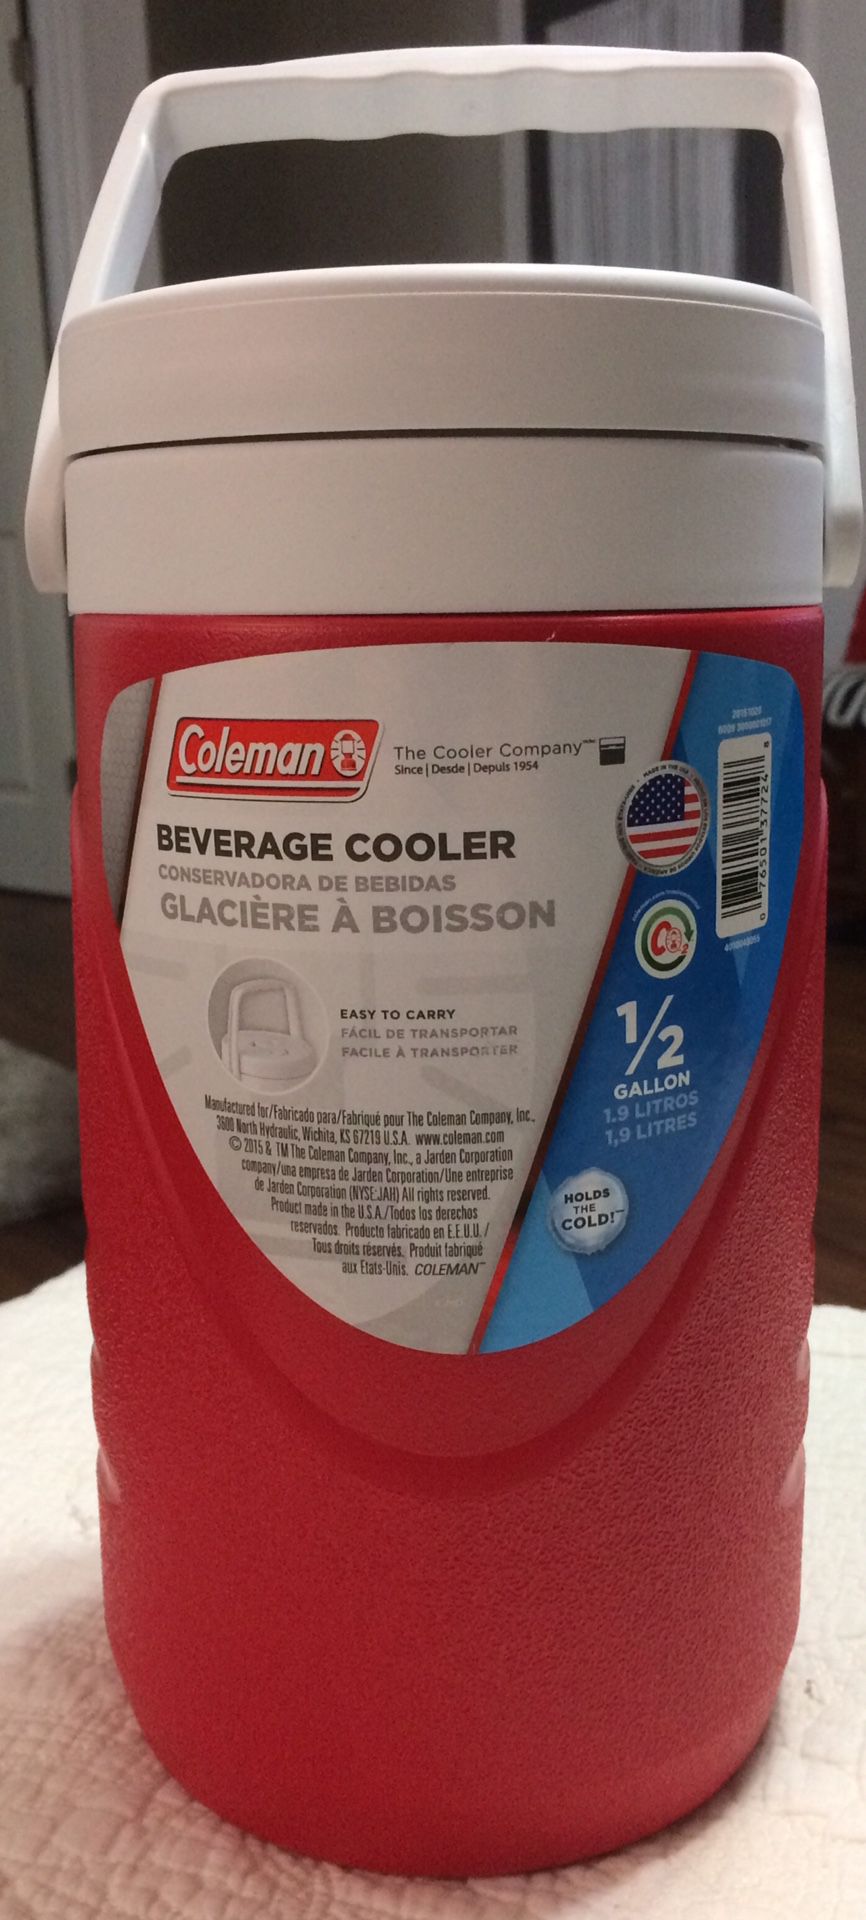 Coleman 1/2 gallon beverage cooler with pourspout